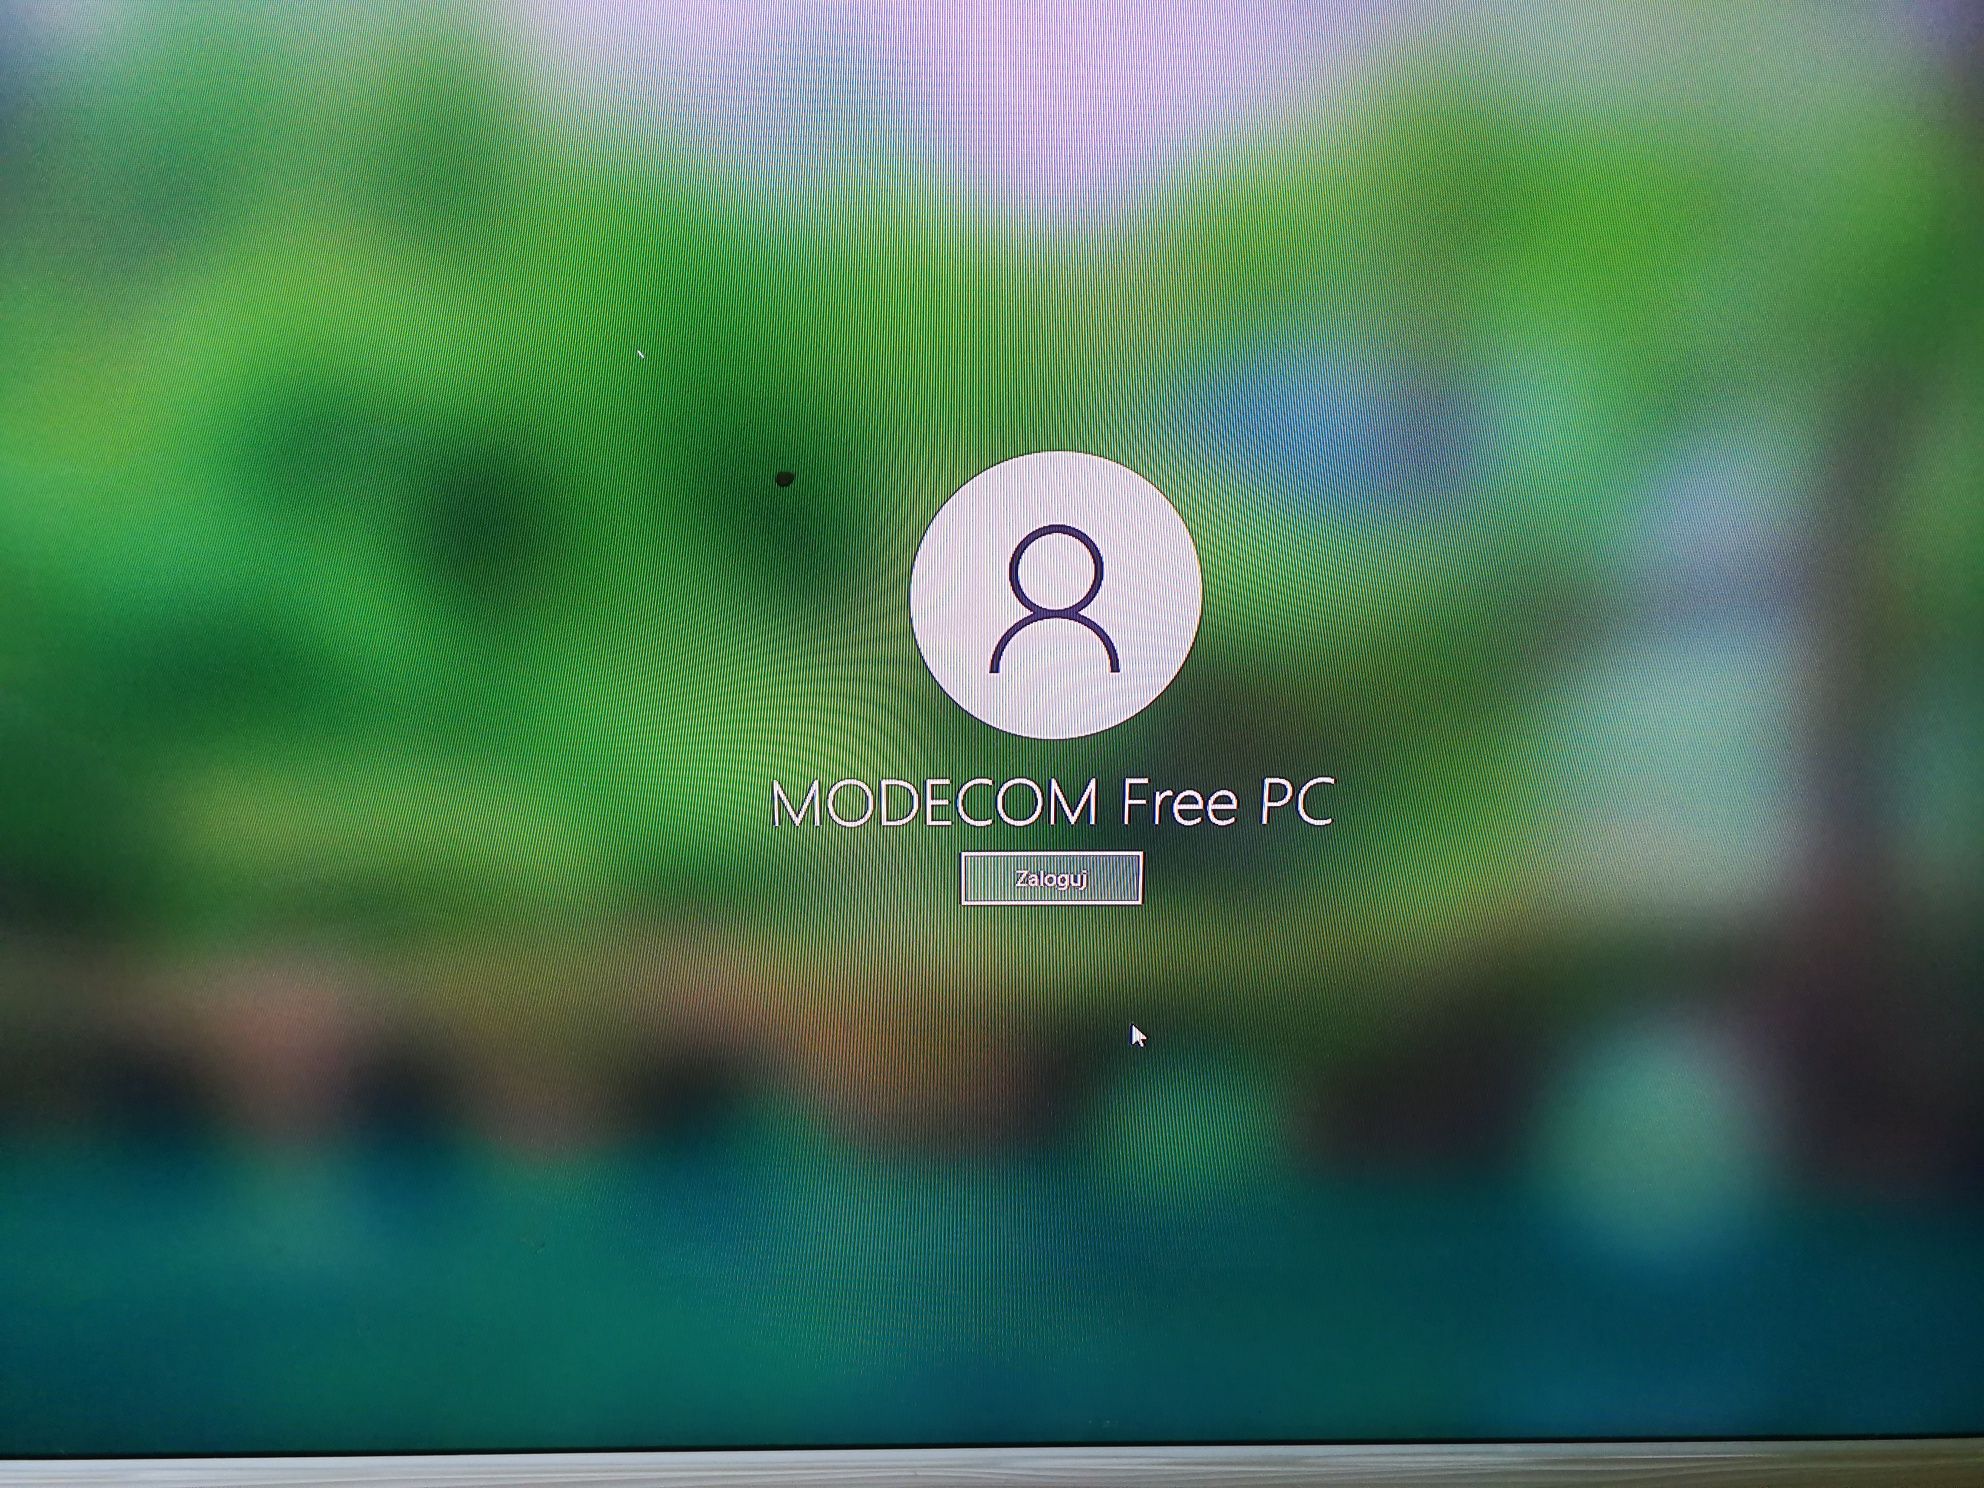 Modecom free PC 32 GB RAM 2 GB Windows 10